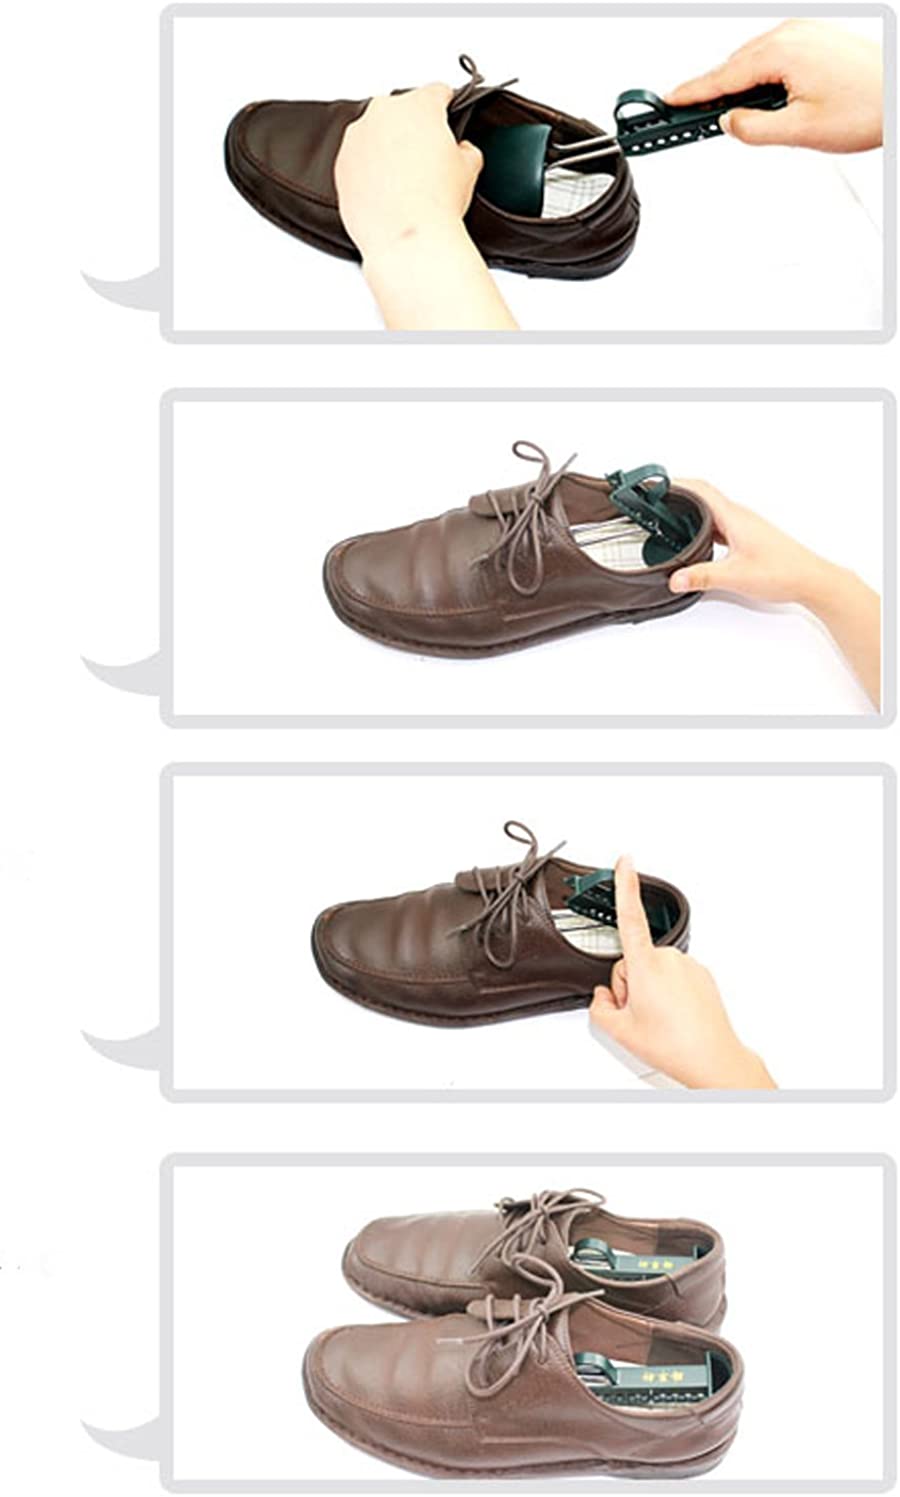 Shoe Tree - Adjustable Shoe Stretcher & Sneaker Keeper by EZB